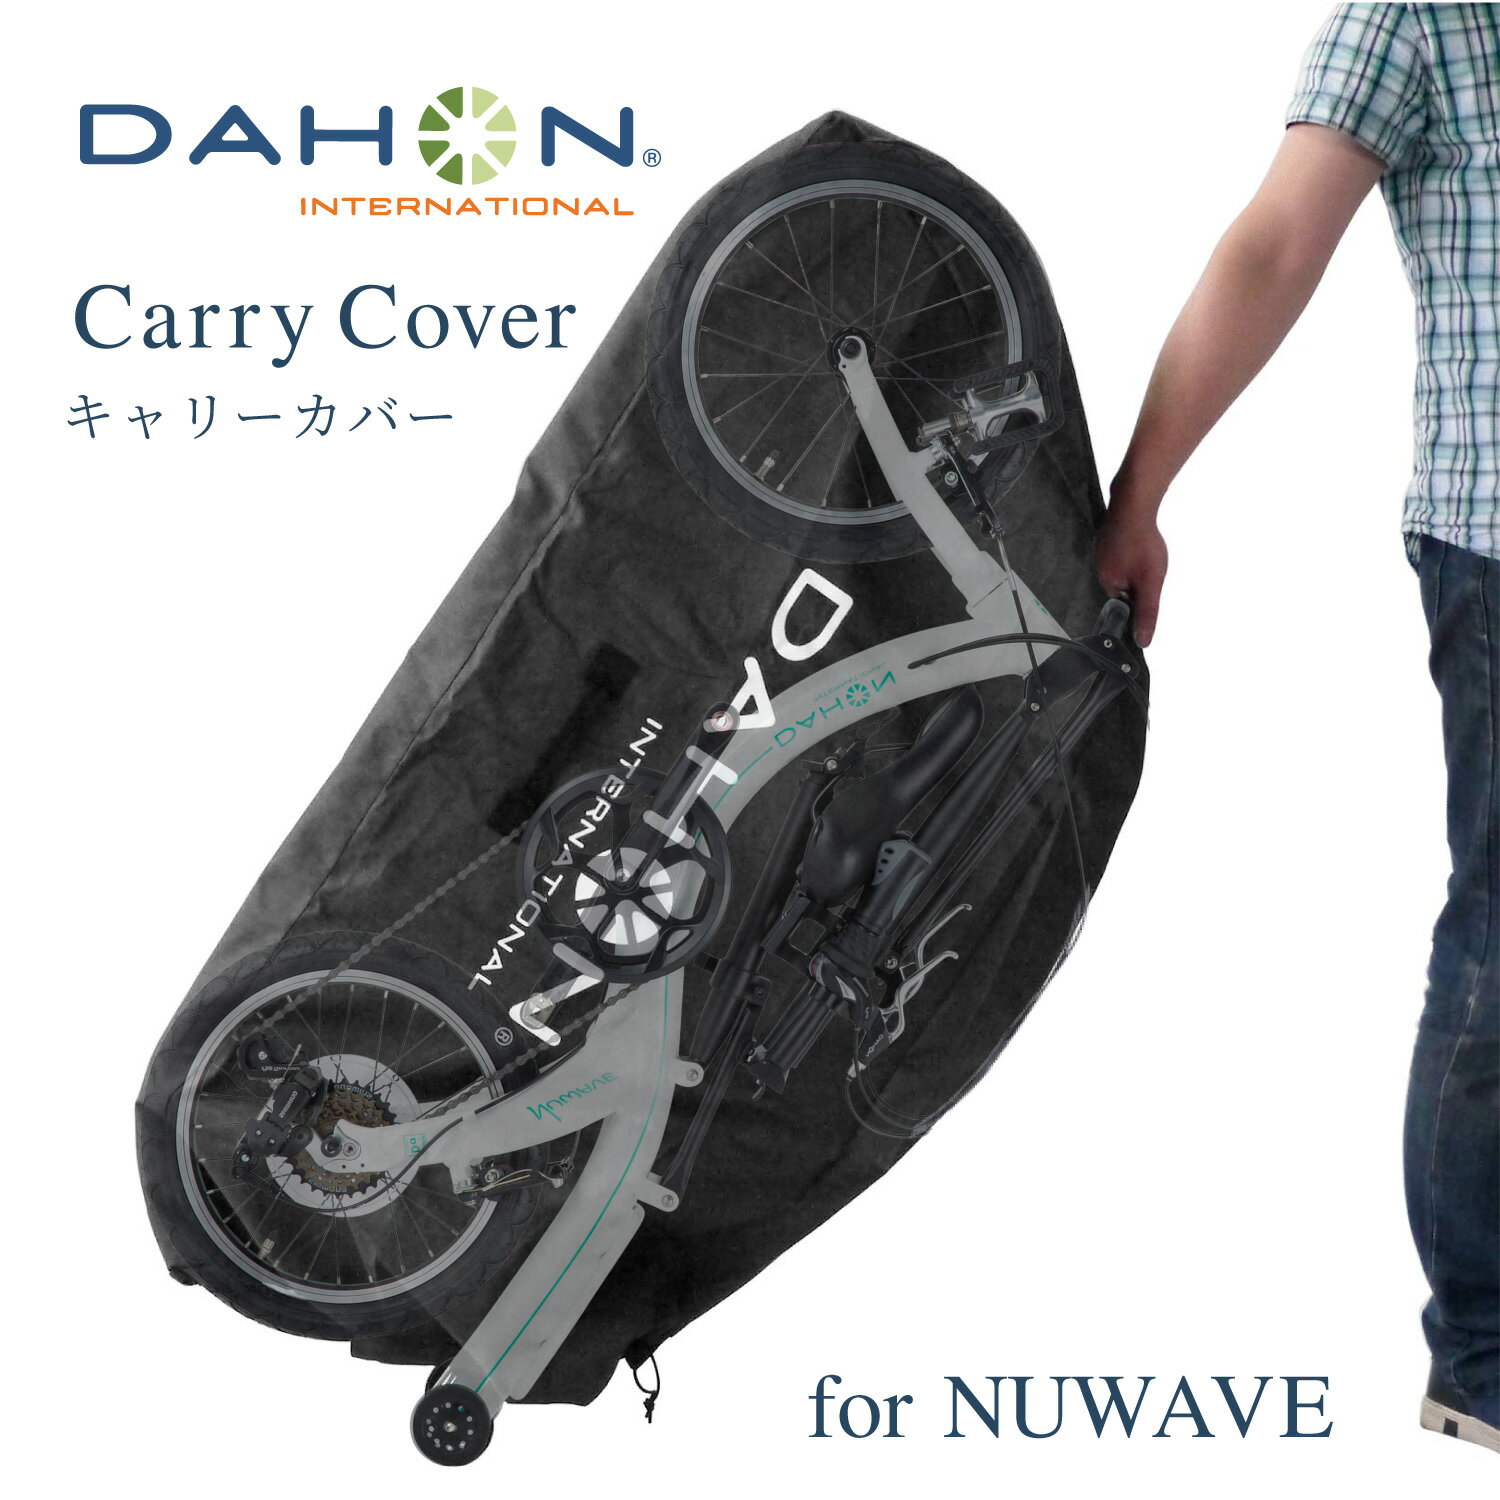 DAHON INTERNATIONAL(ダホンインターナショナル) Carry Cover(キャリーカバー)NUWAVE専用 輪行カバー ハンドル固定型収納ケース付き 肩掛けベルト付き 手持ちグリップ付き ブラック